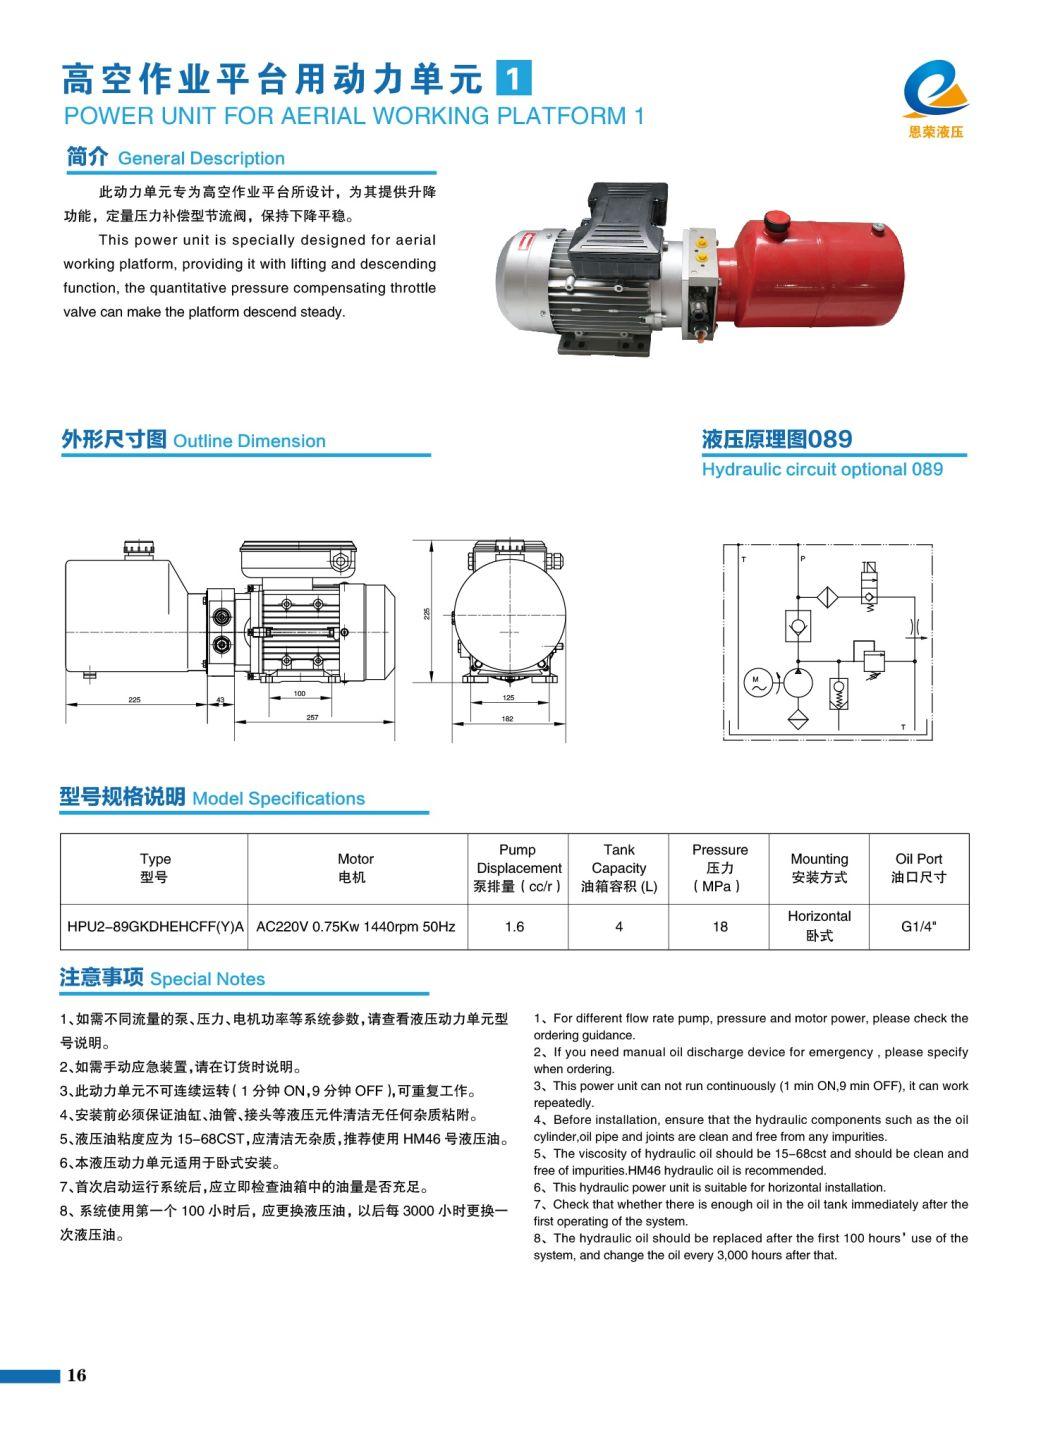 Hydraulic Power System for Scissor Type Aerial Work Platform